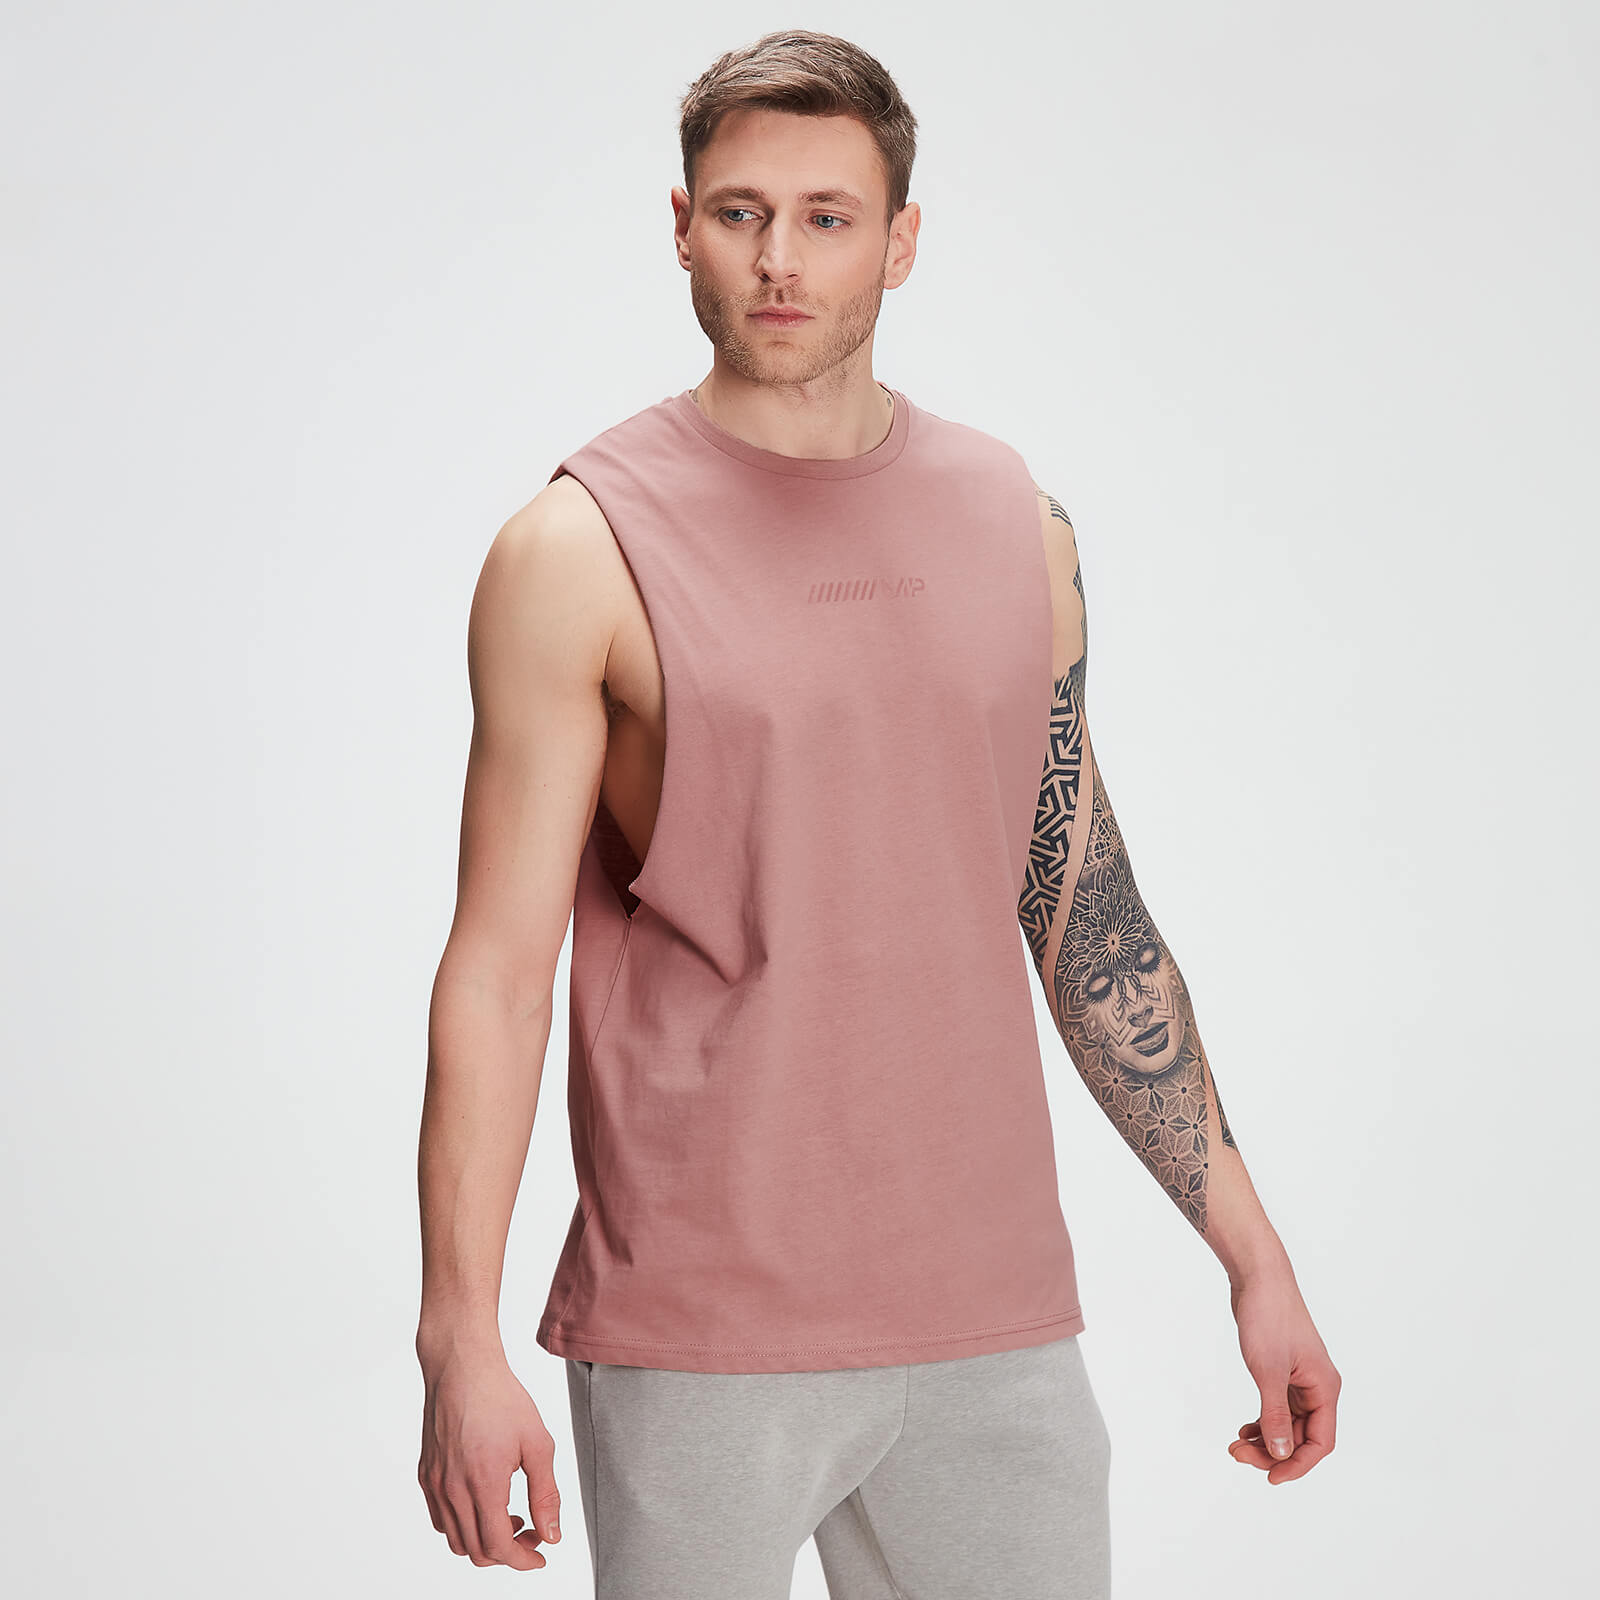 Mp Camiseta sin mangas Tonal Graphic para hombre de  - Rosa lavado - XXL